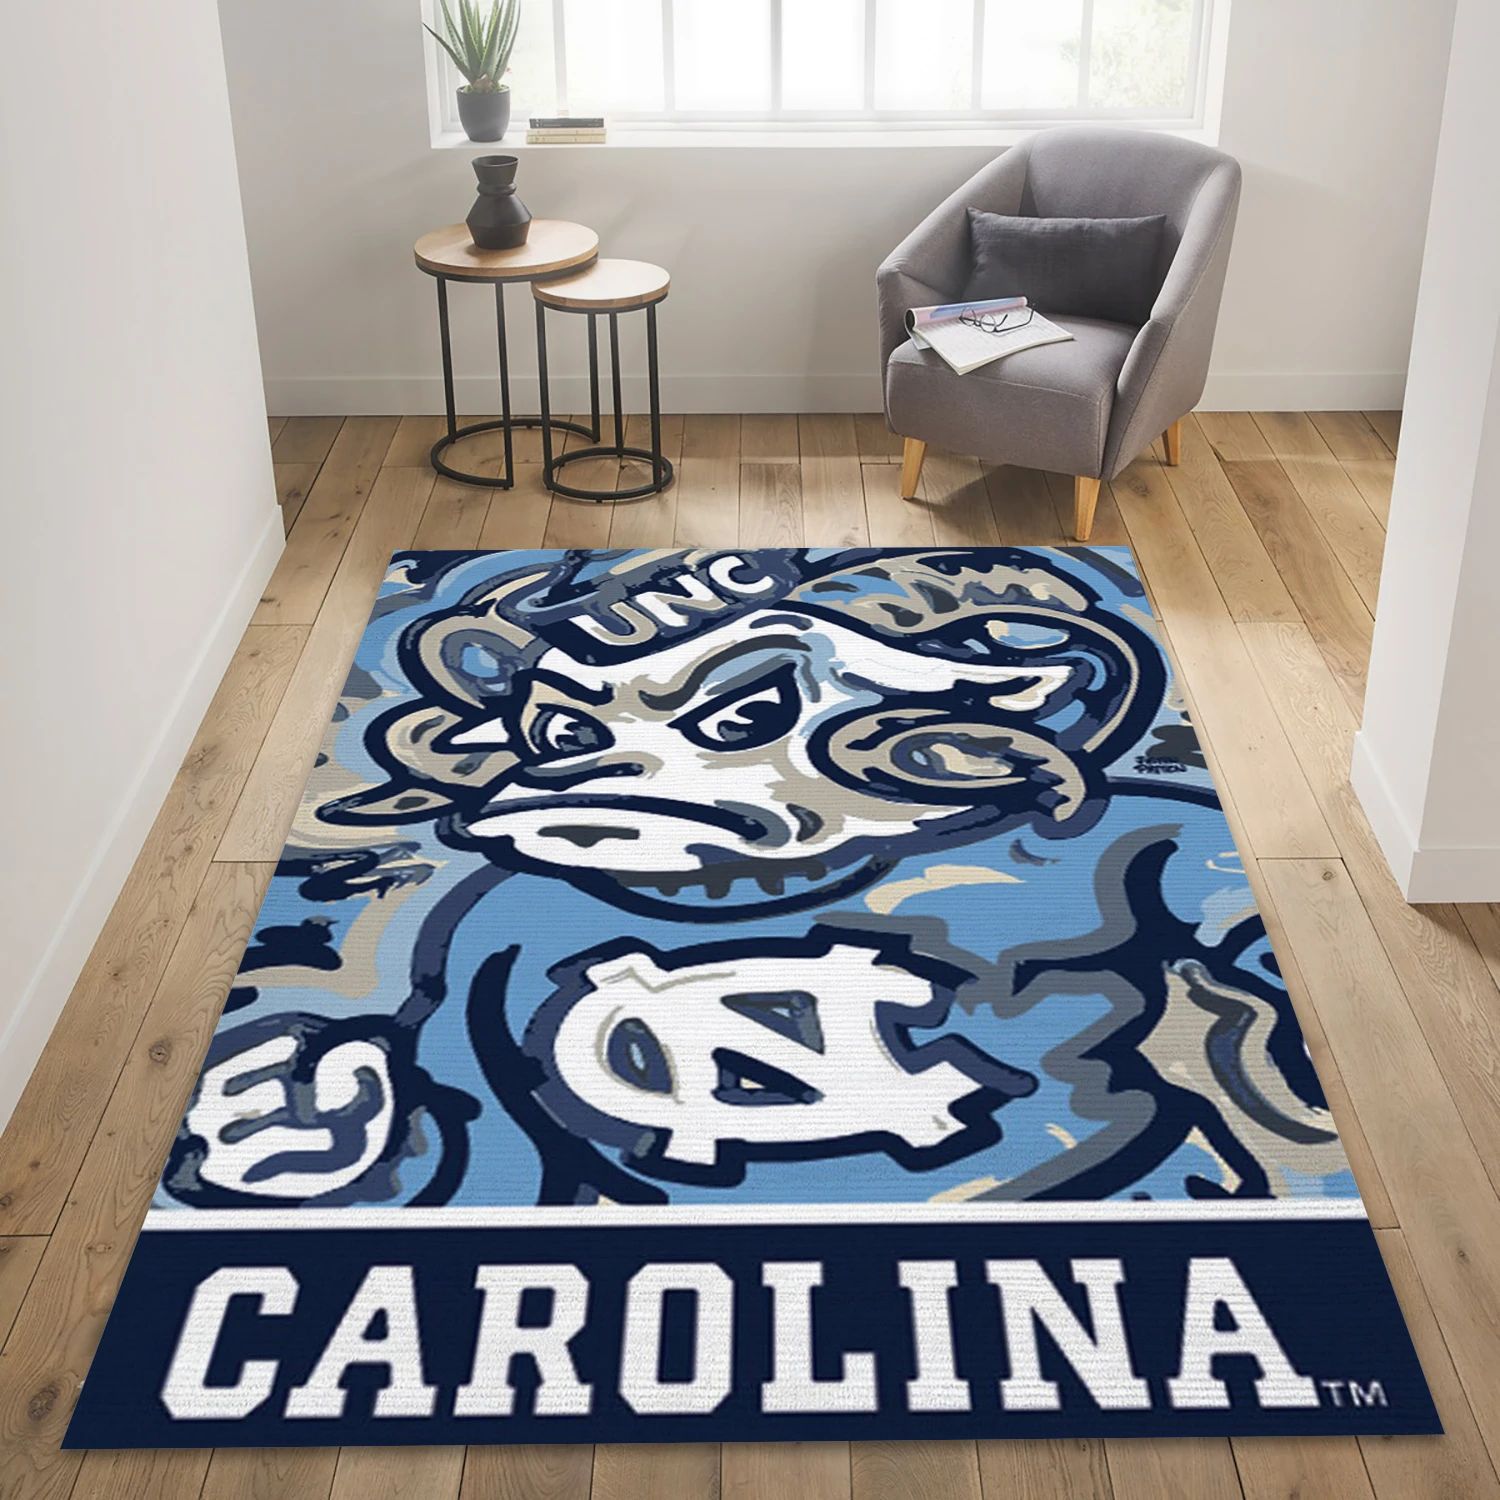 North carolina tar heels college team area rug- living room rug - floor decor - large ( 5 x 8 ft )